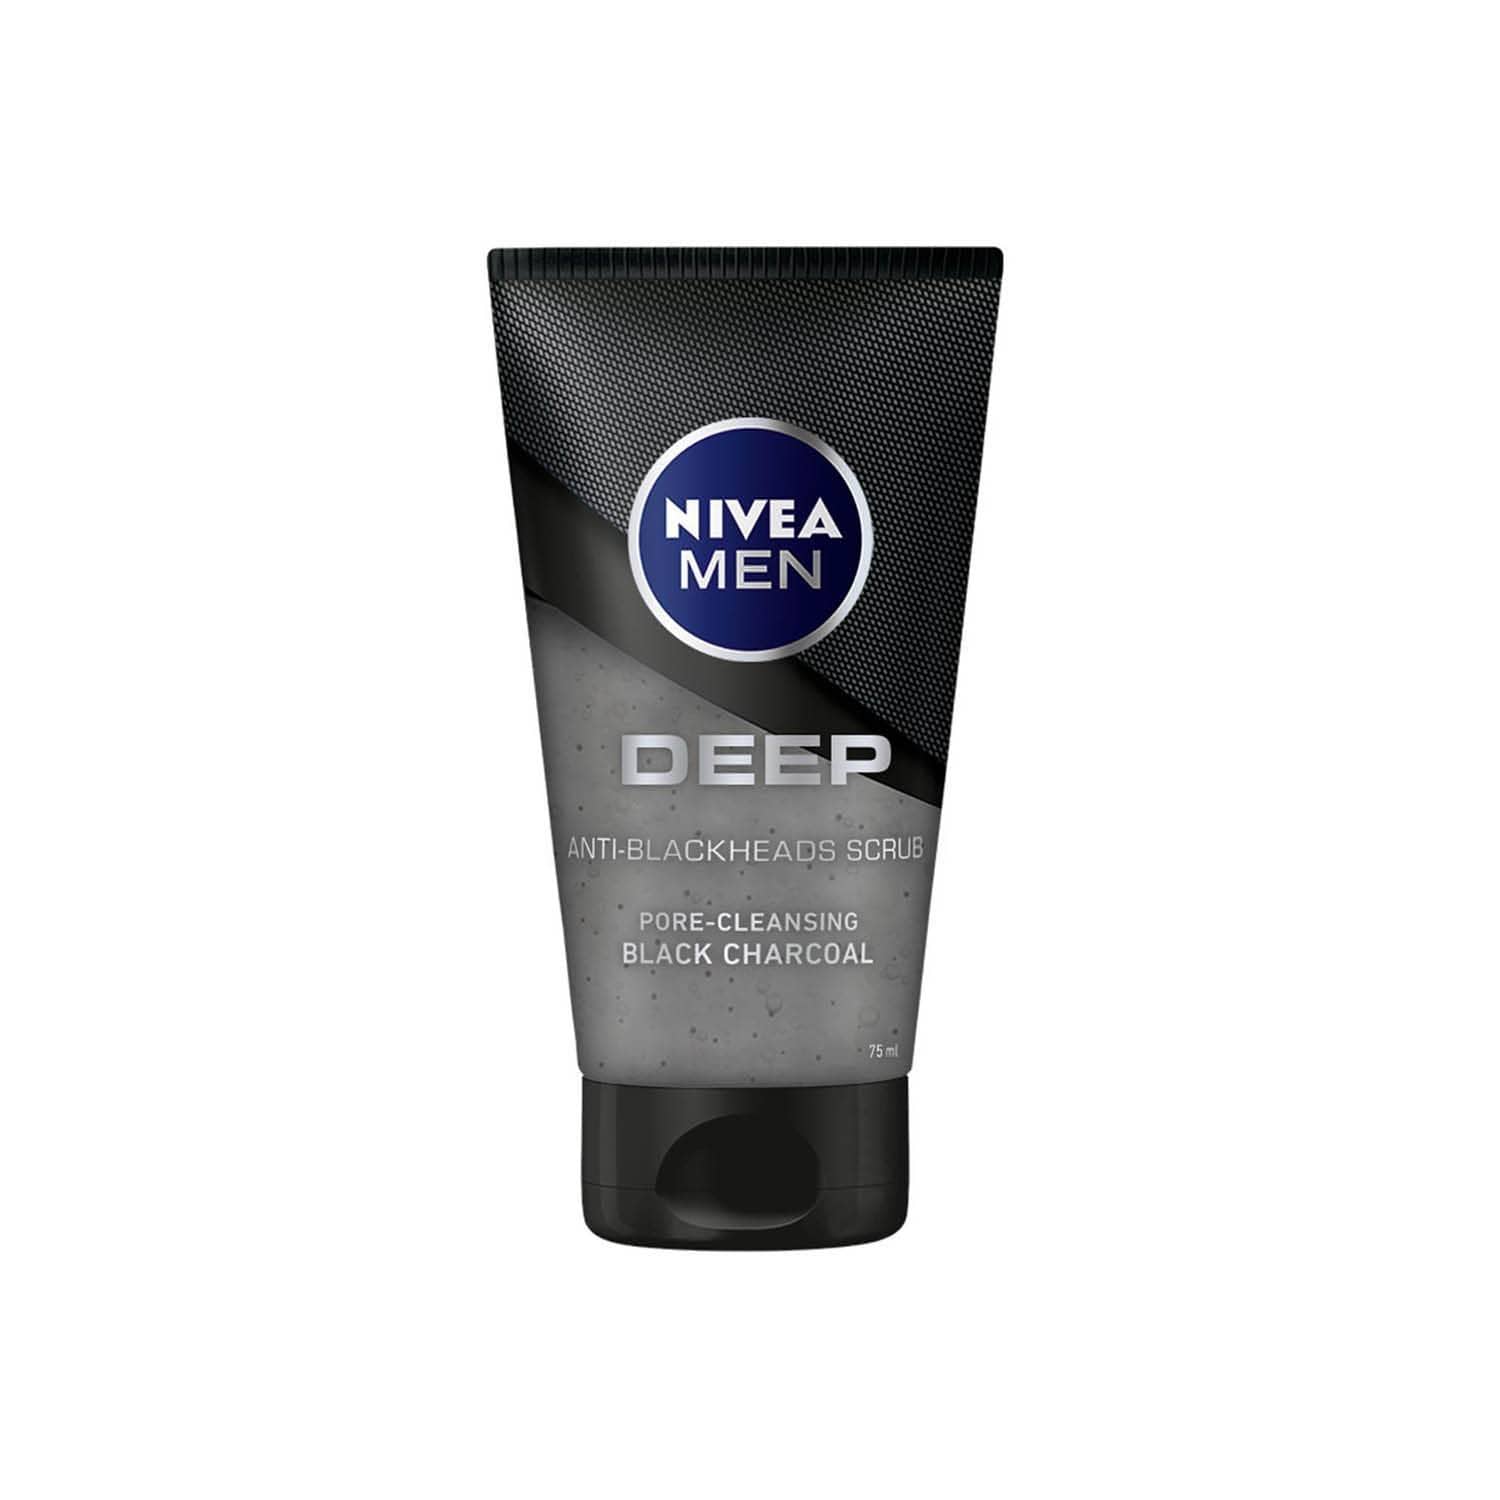 Nivea Toiletries Nivea Men Deep Anti-Blackhead Facial Scrub, 75ml 4005900626356 233748